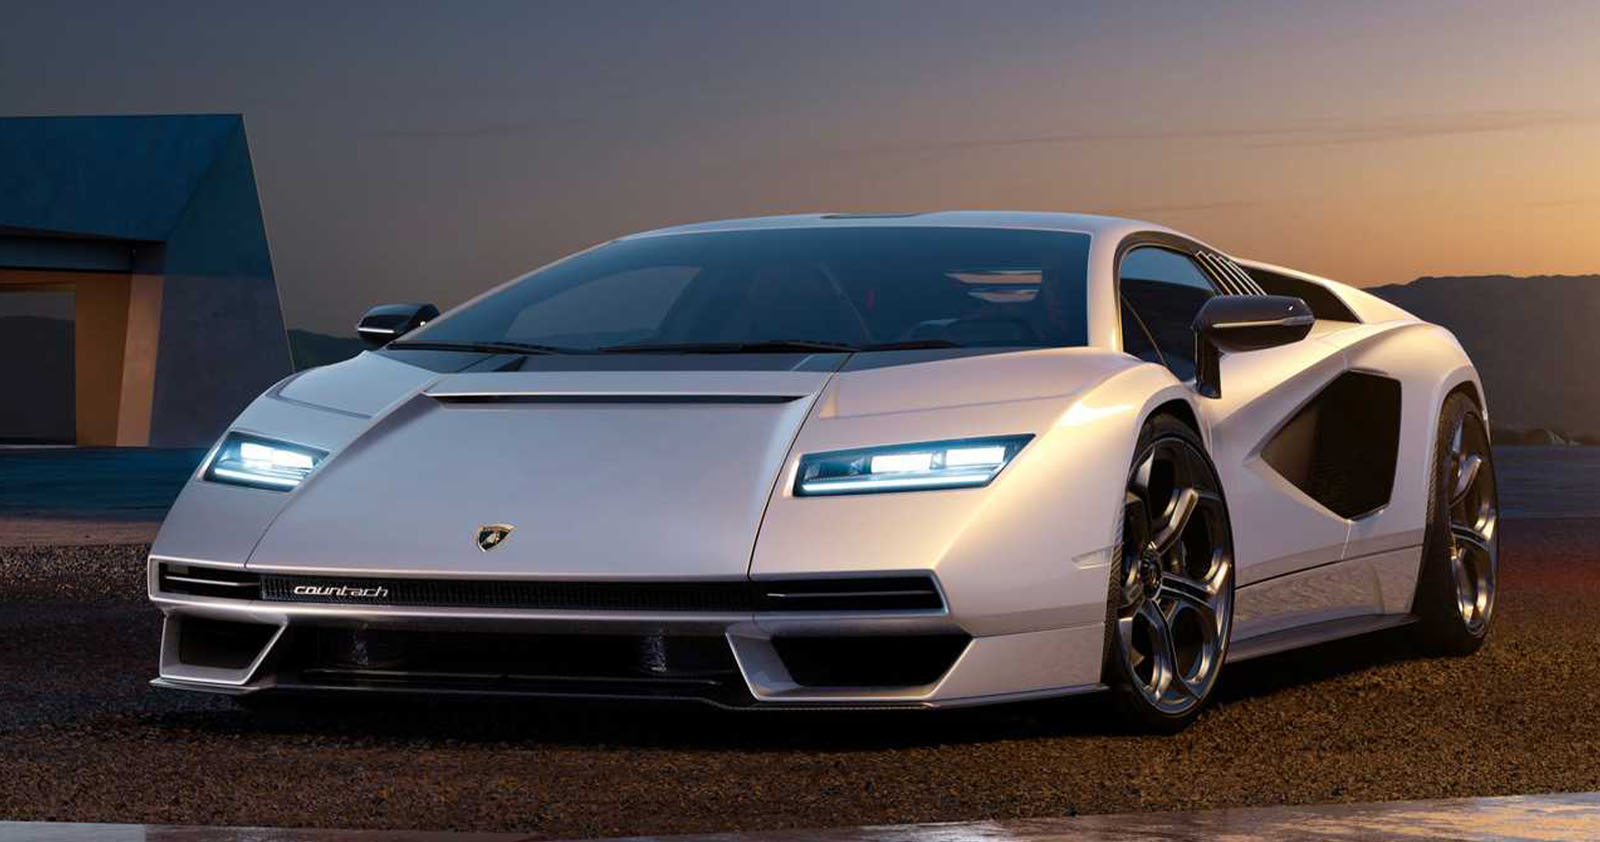 2022 pearl white Lamborghini Countach LPI 800-4 hybrid